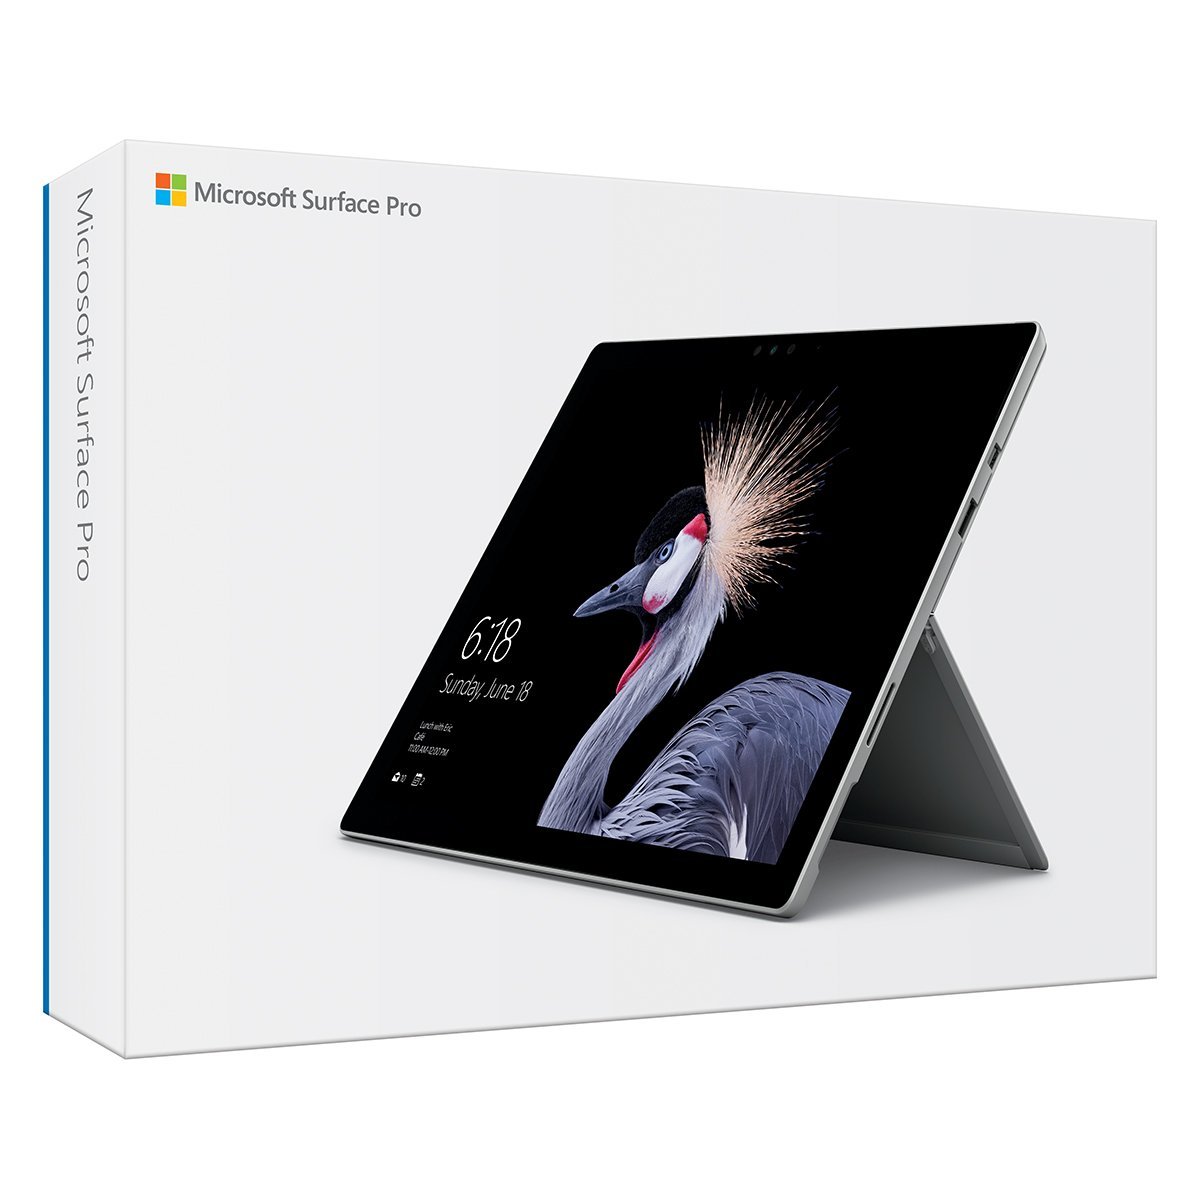 Microsoft Surface Pro Intel Core i5, 8GB RAM, 256GB